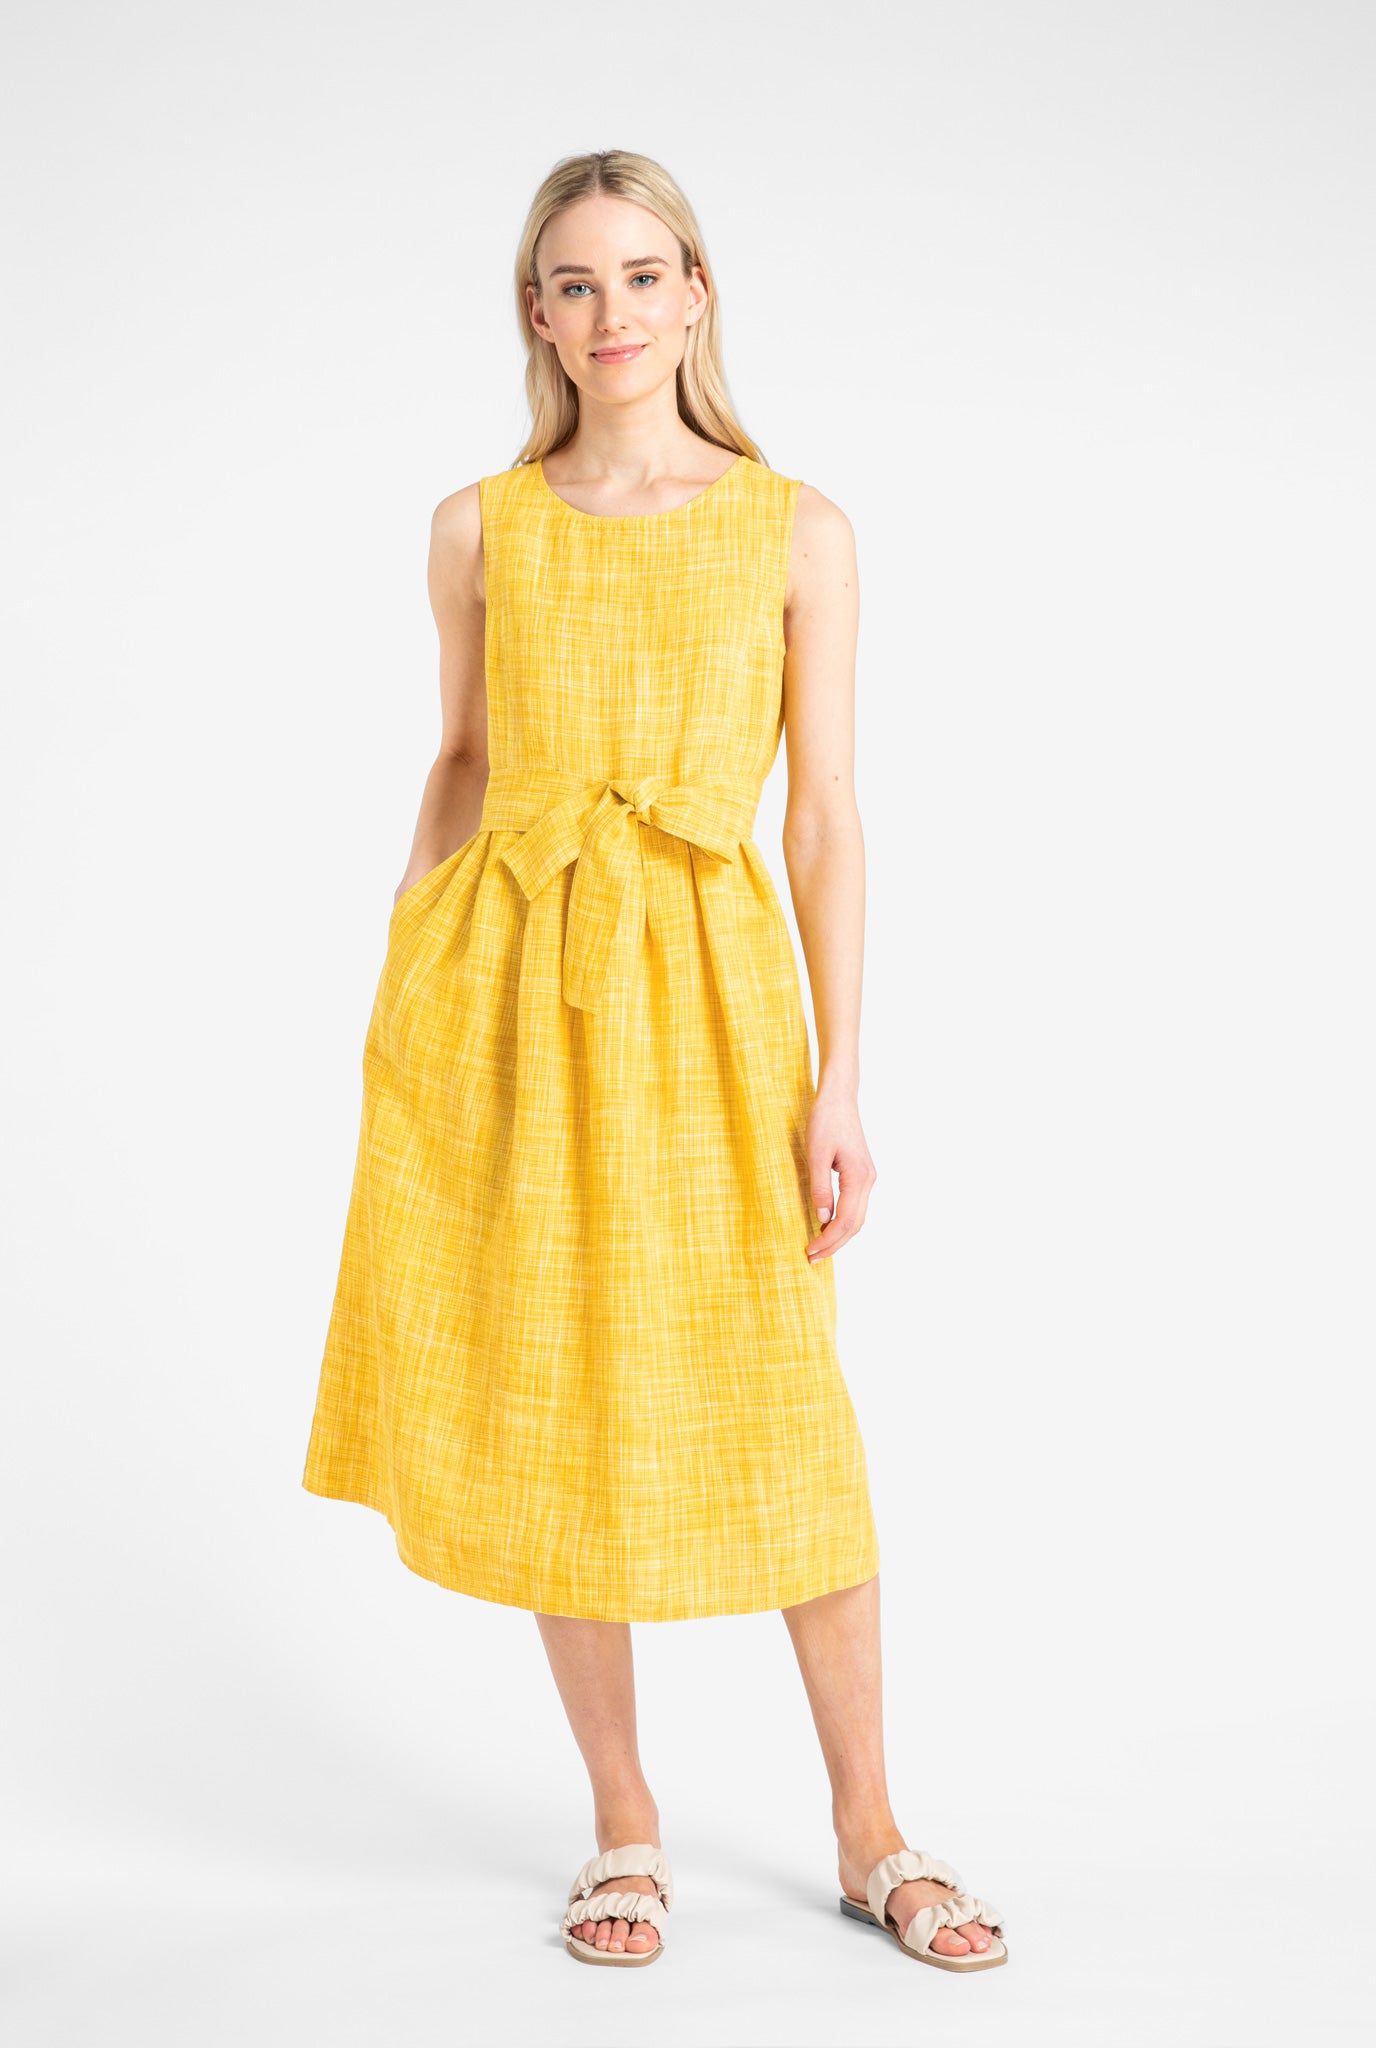 Kuusama Birgit Linen Sleeveless Dress, Yellow Melange